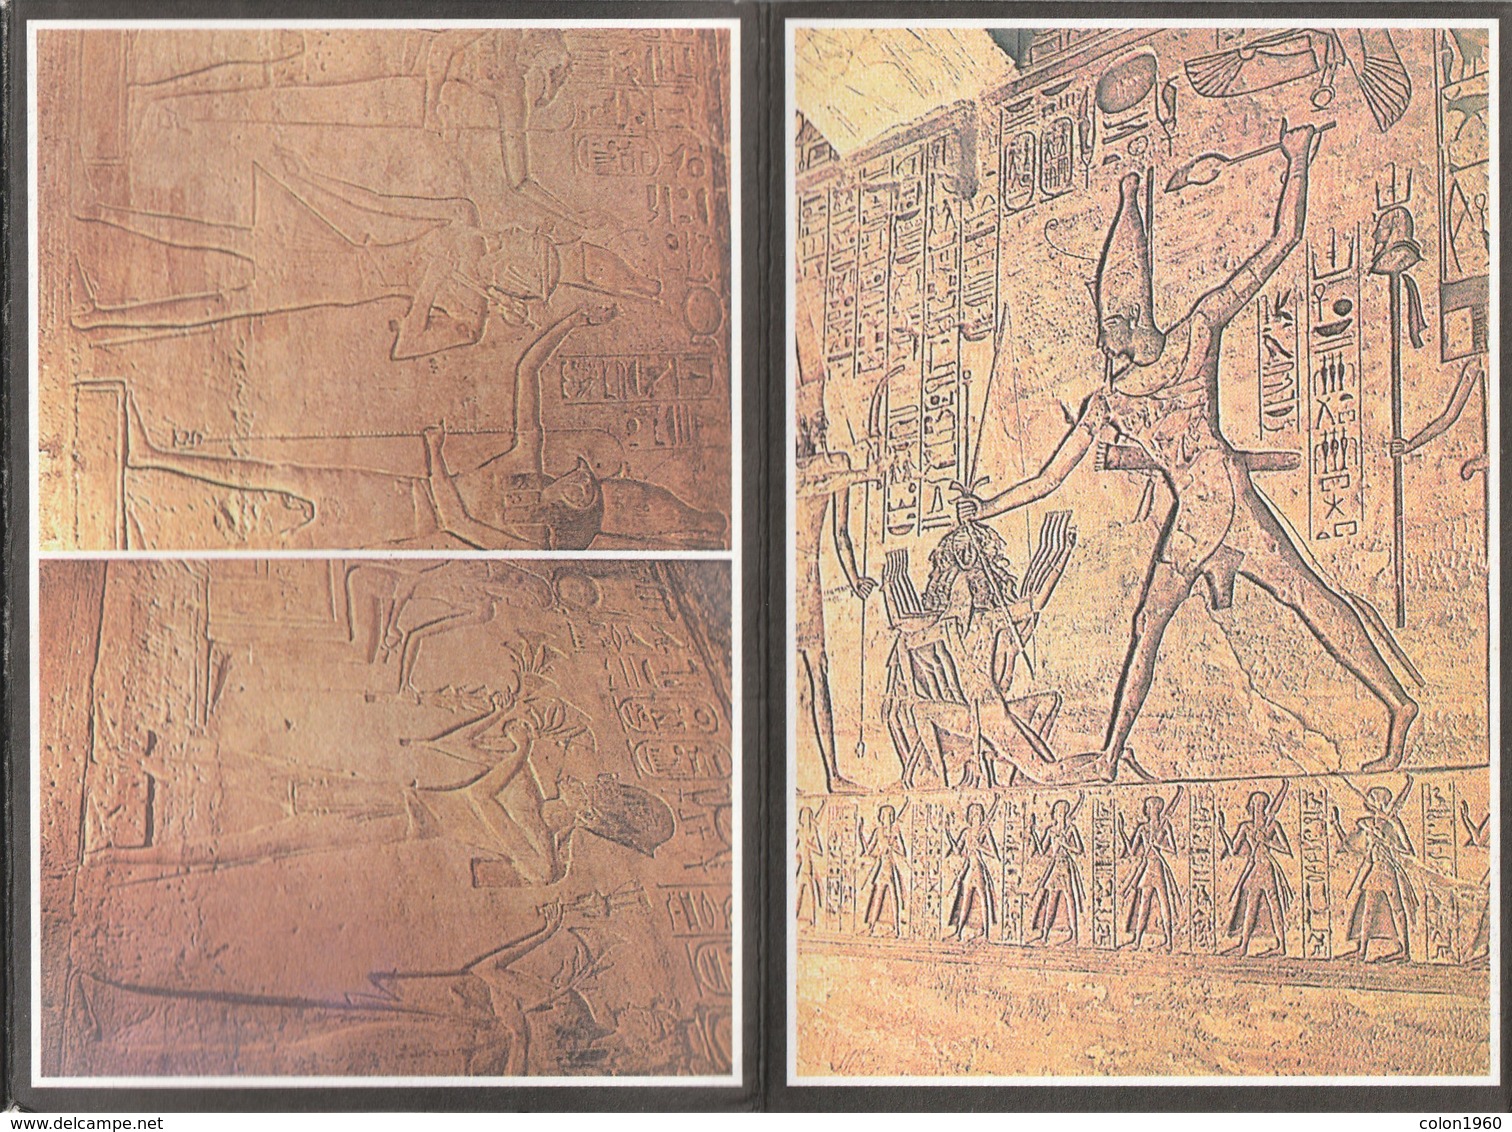 LIBRO EN PLIEGUE DE 18 POSTALES DE EGIPTO. ARQUEOLOGIA. APU SEMBAL TEMBLE. (1034).